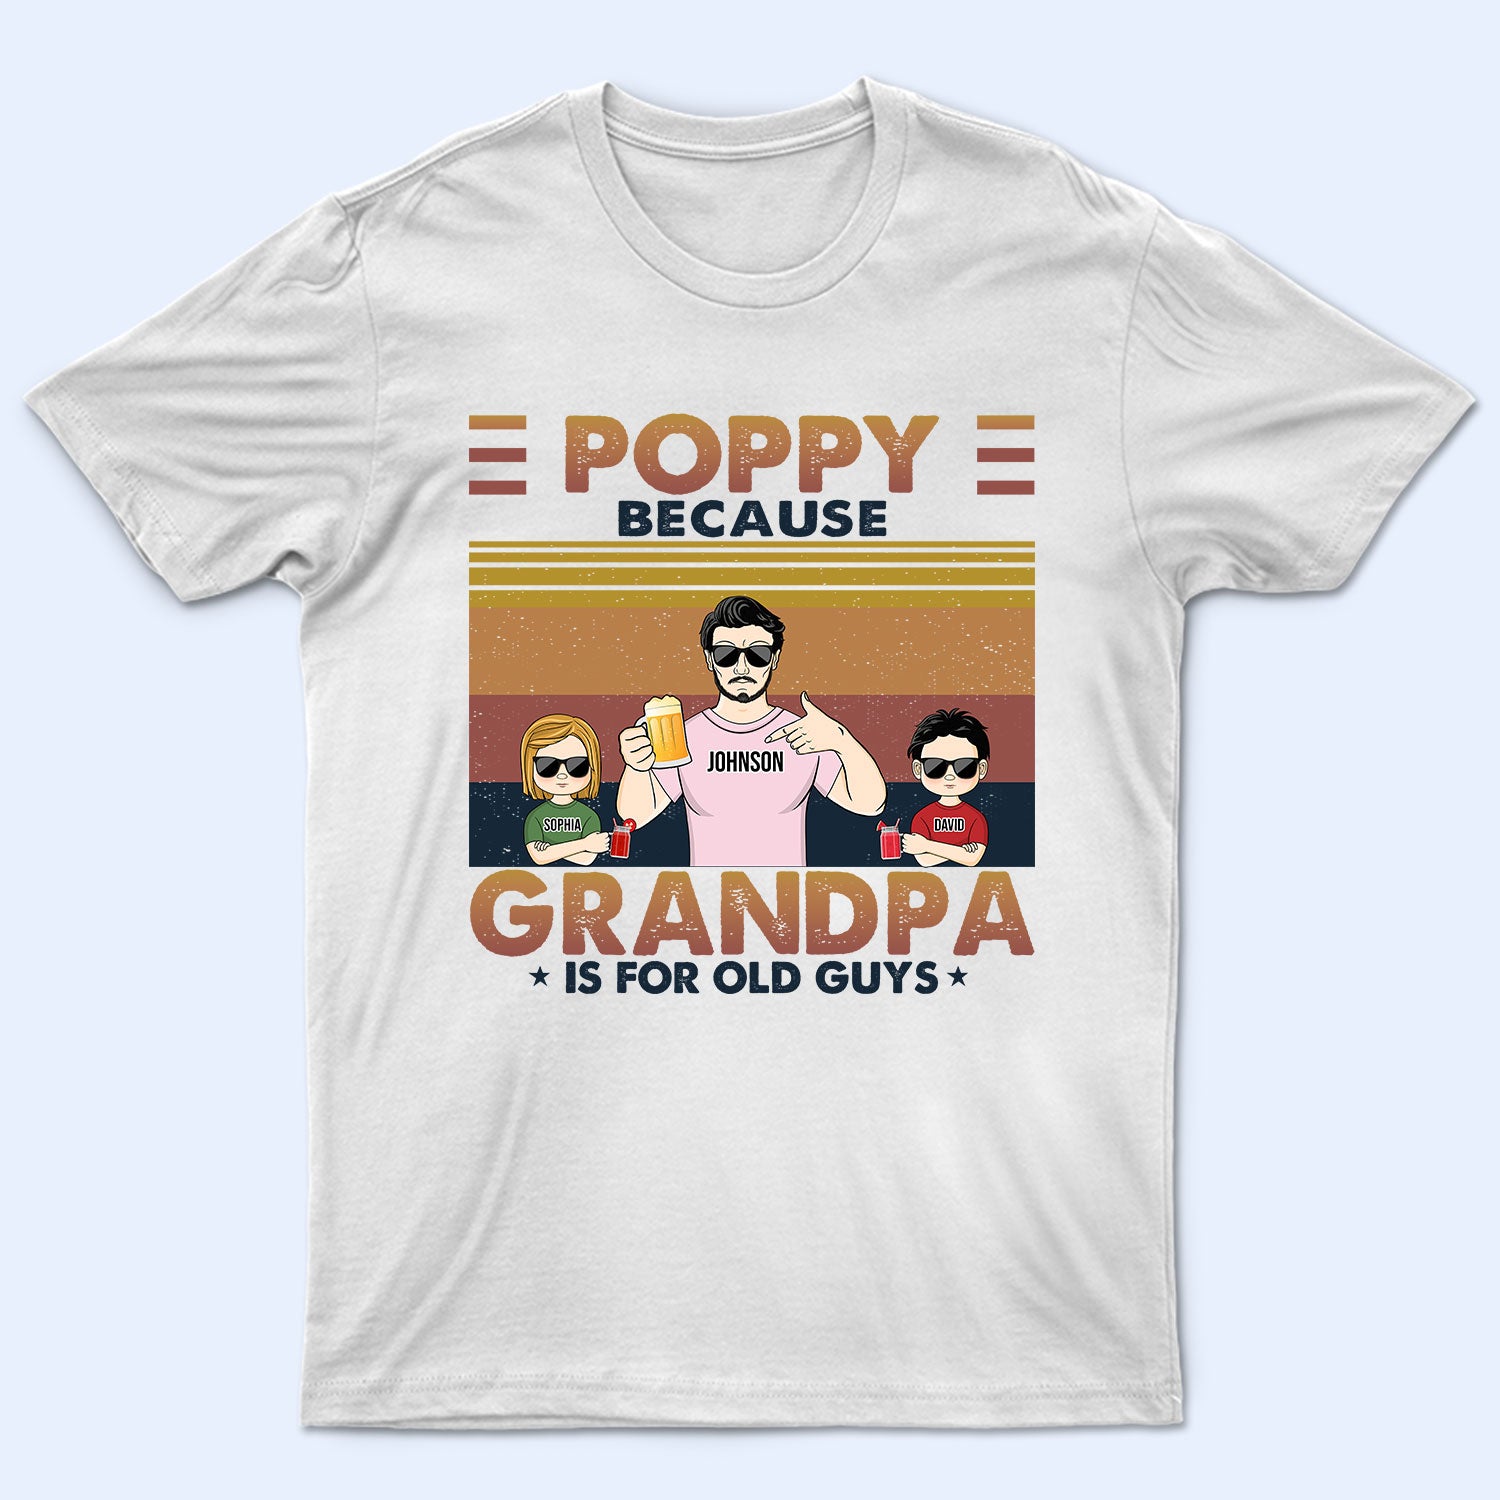 Poppy Because Grandpa Is For Old Guys - Birthday, Loving Gift For Grandfather, Grandkids, Grandchildren, Granddaughters, Grandsons - Personalized Custom T Shirt